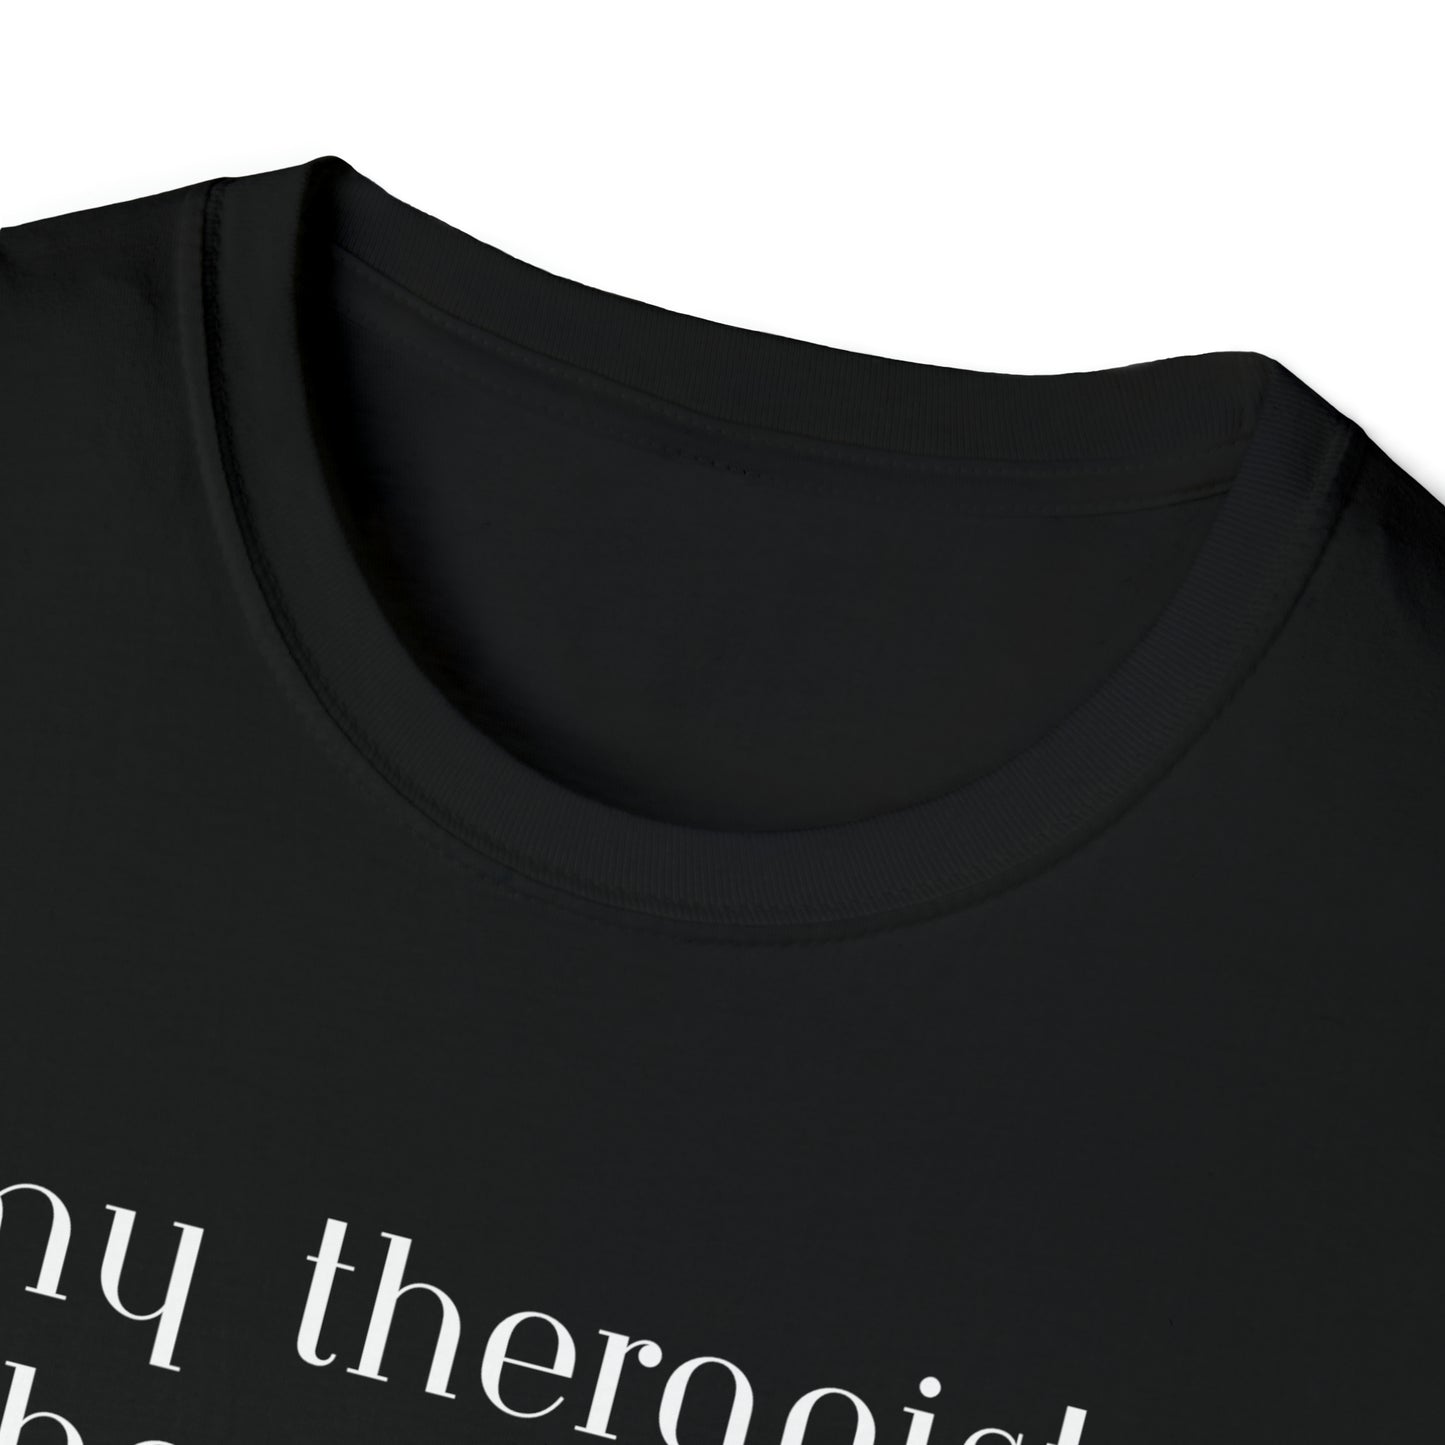 Therapist Unisex Softstyle T-Shirt